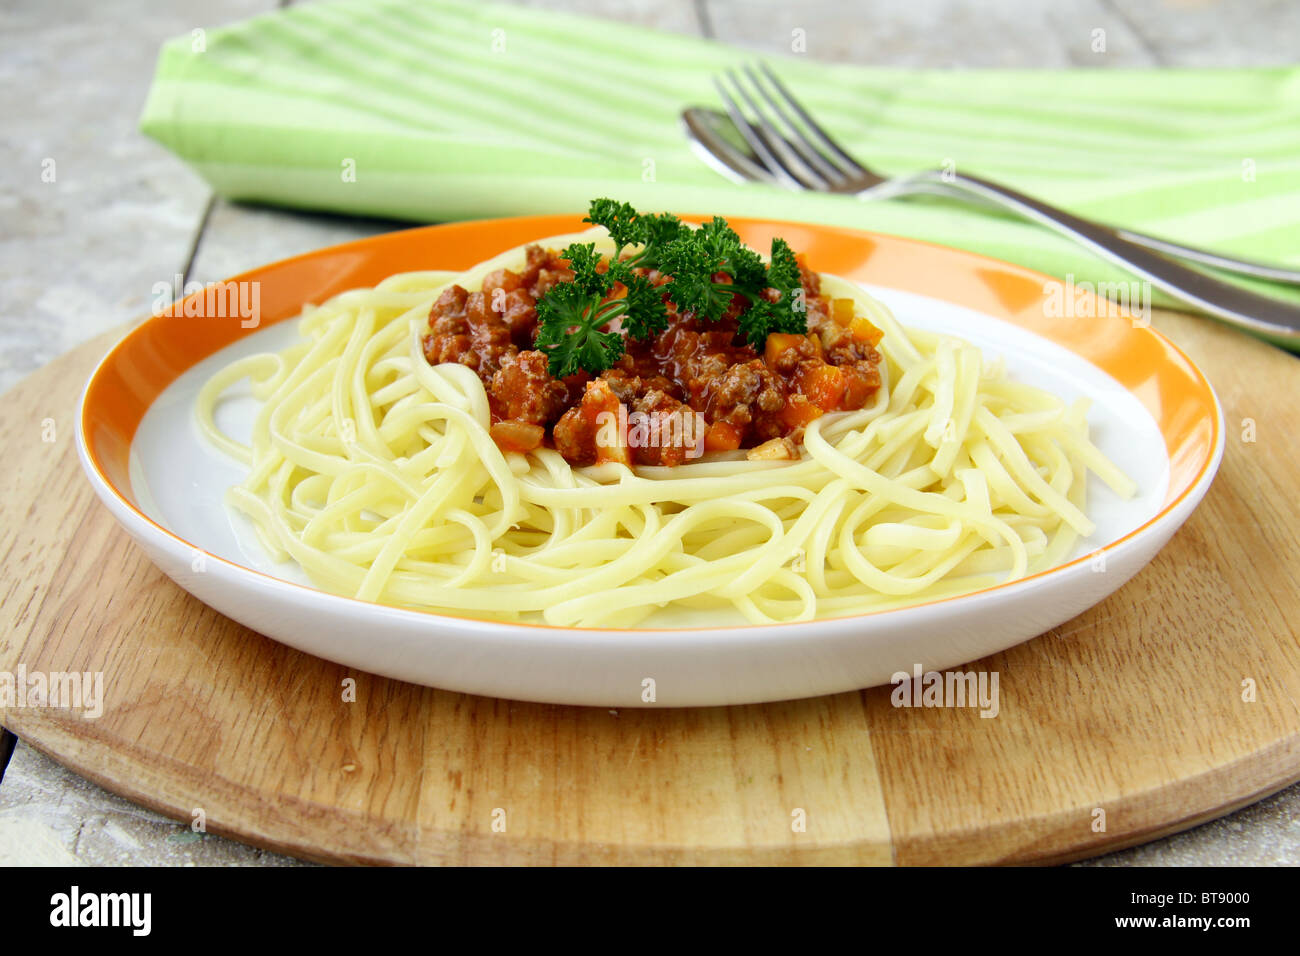 Spaghetti auf dem Teller Stockfotografie - Alamy